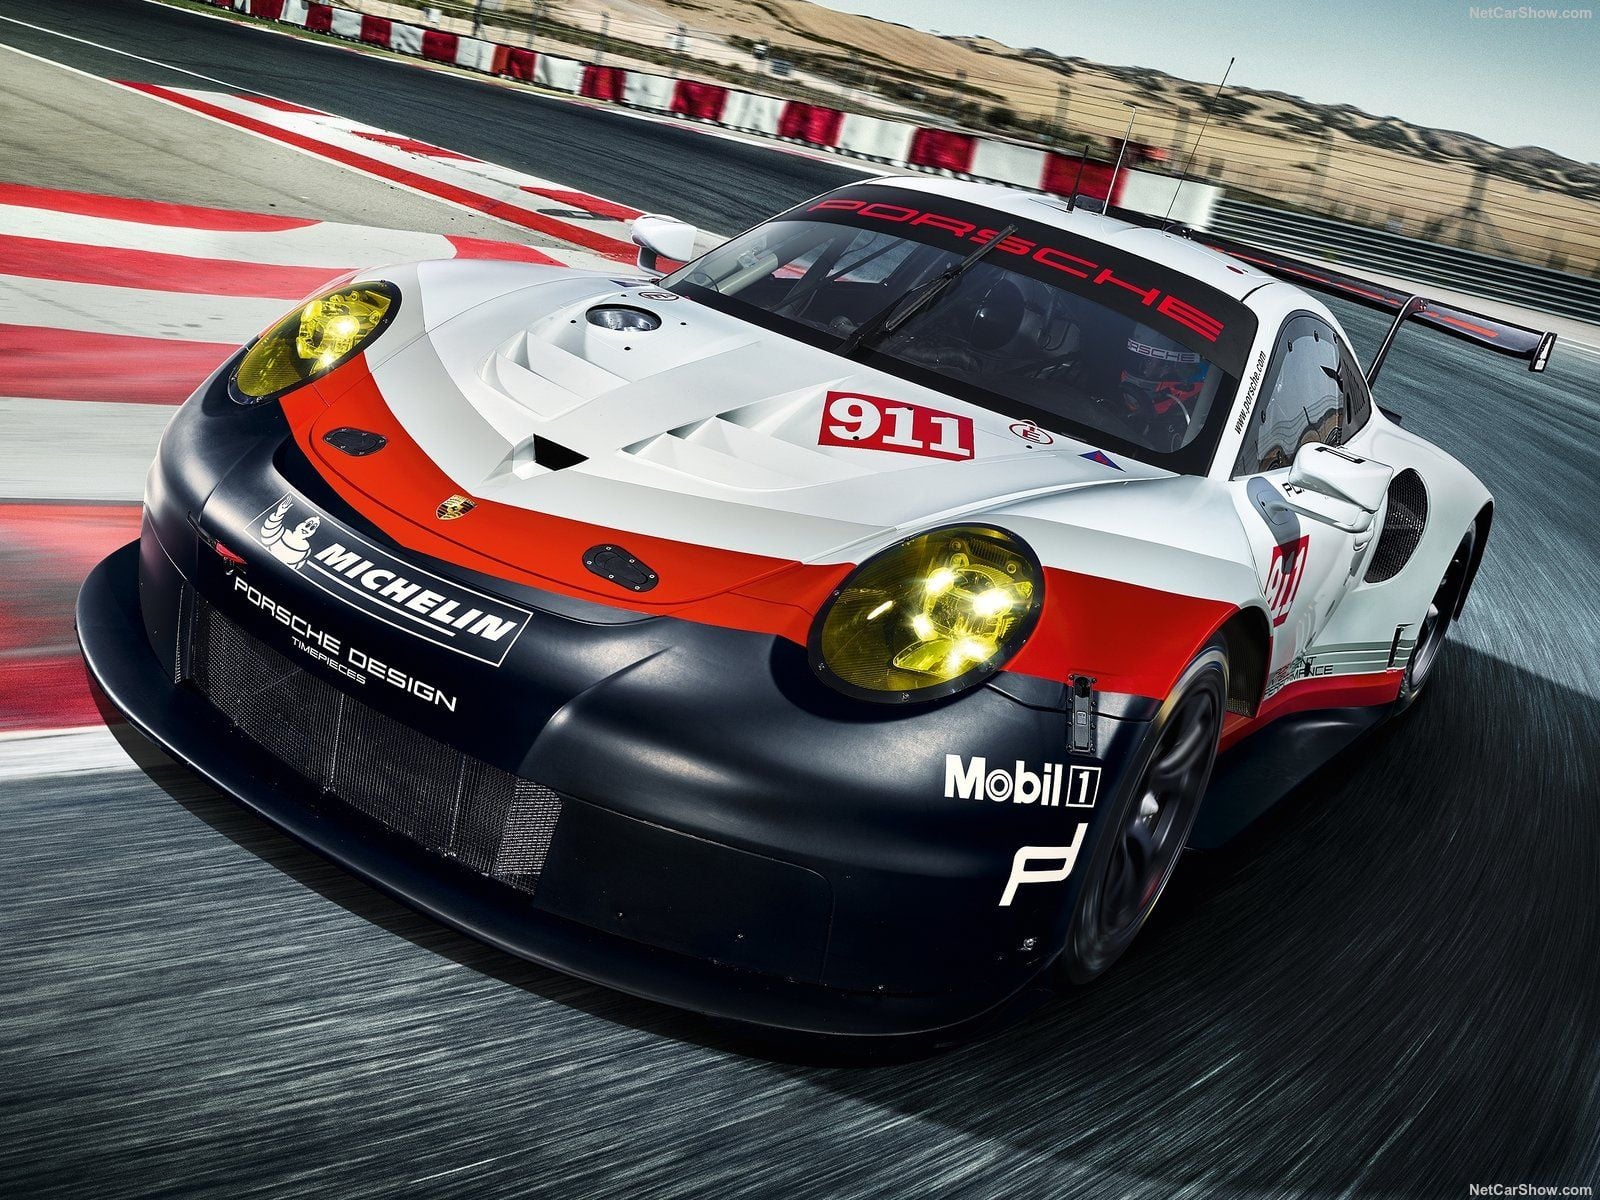 Porsche: 911 RSR News - Page 2 - AcuraZine - Acura Enthusiast Community